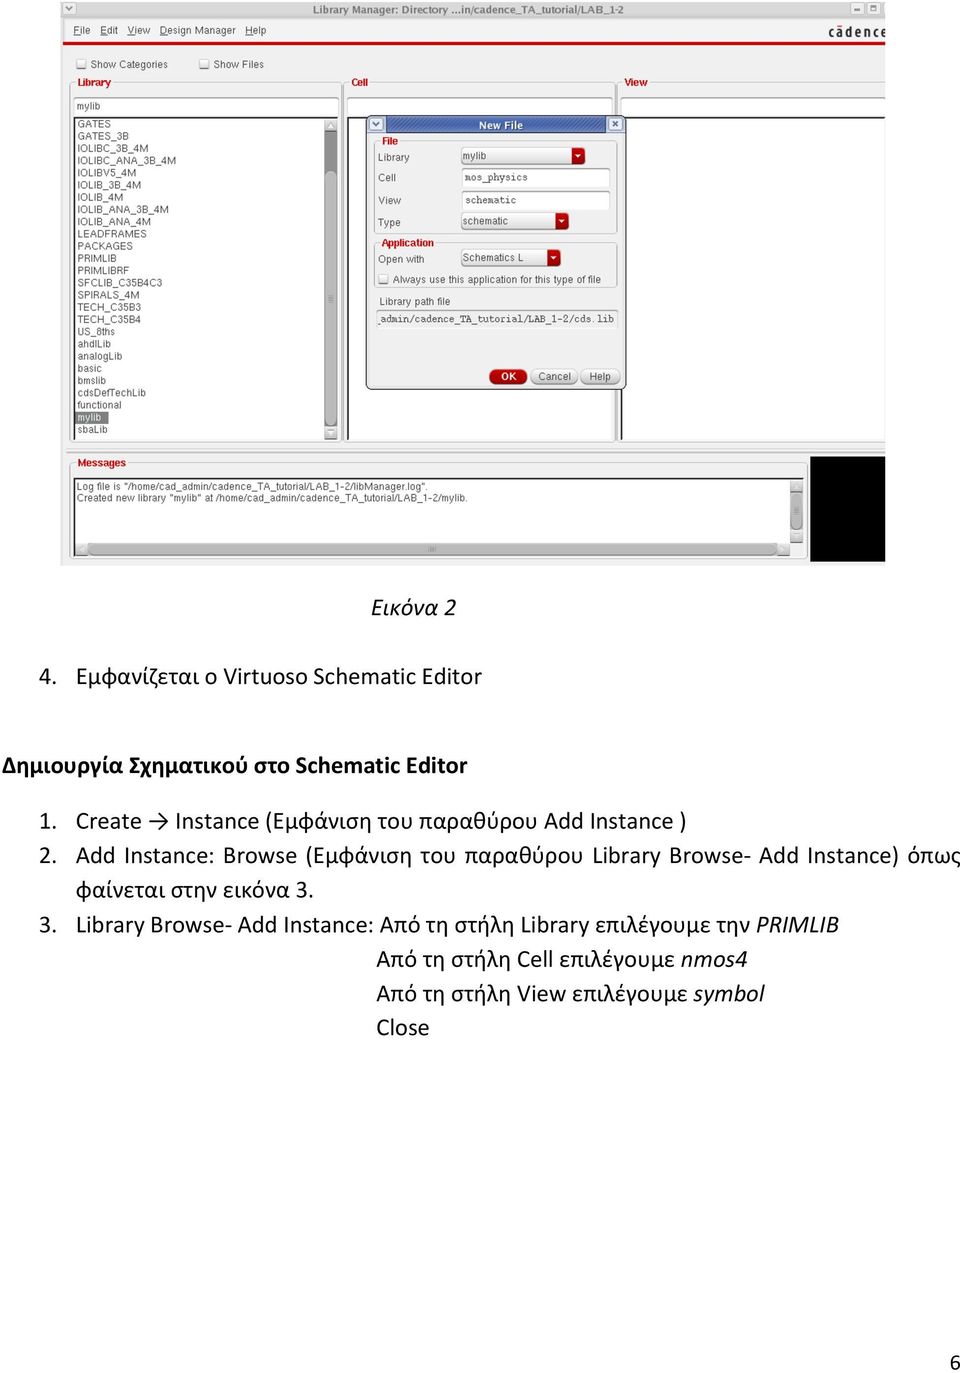 Add Instance: Browse (Εμφάνιση του παραθύρου Library Browse- Add Instance) όπως φαίνεται στην εικόνα 3.